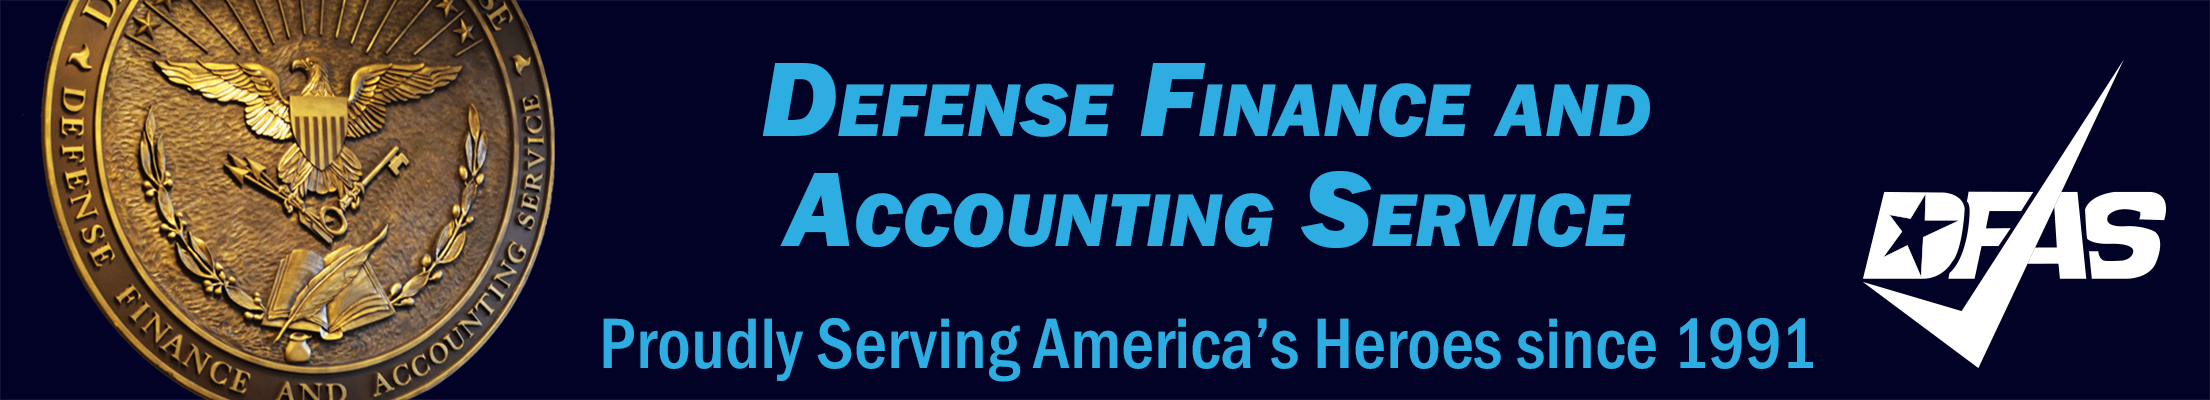 DFAS seal, Defense Finance and Accounting Service, DFAS check mark logo